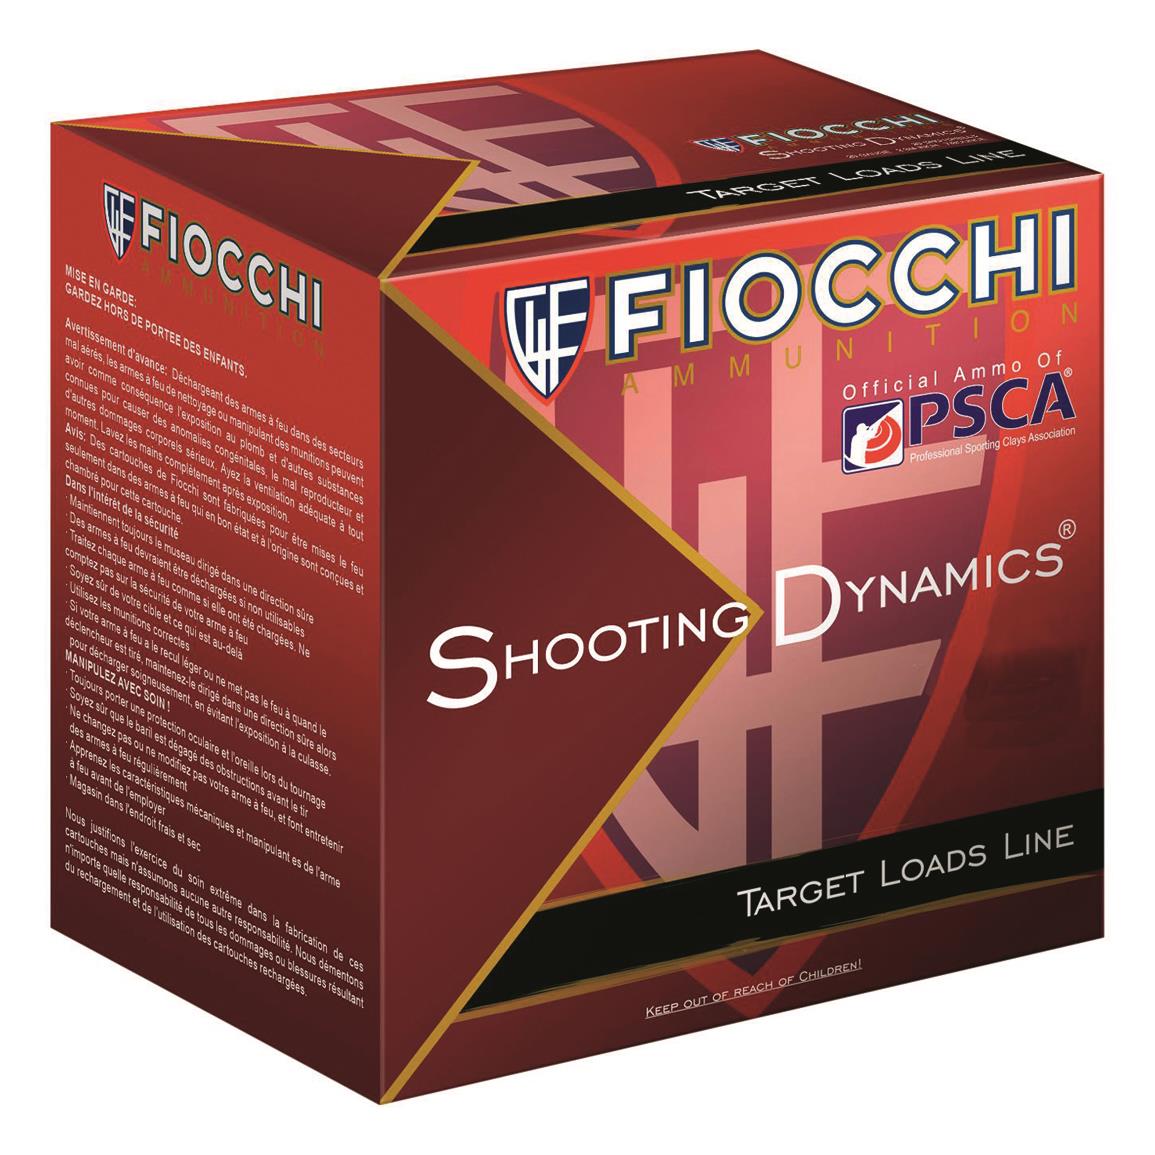 Fiocchi Shooting Dynamics Light Dynamic, 12 Gauge Ammo, 2 3/4", 1 oz., 250 Rounds